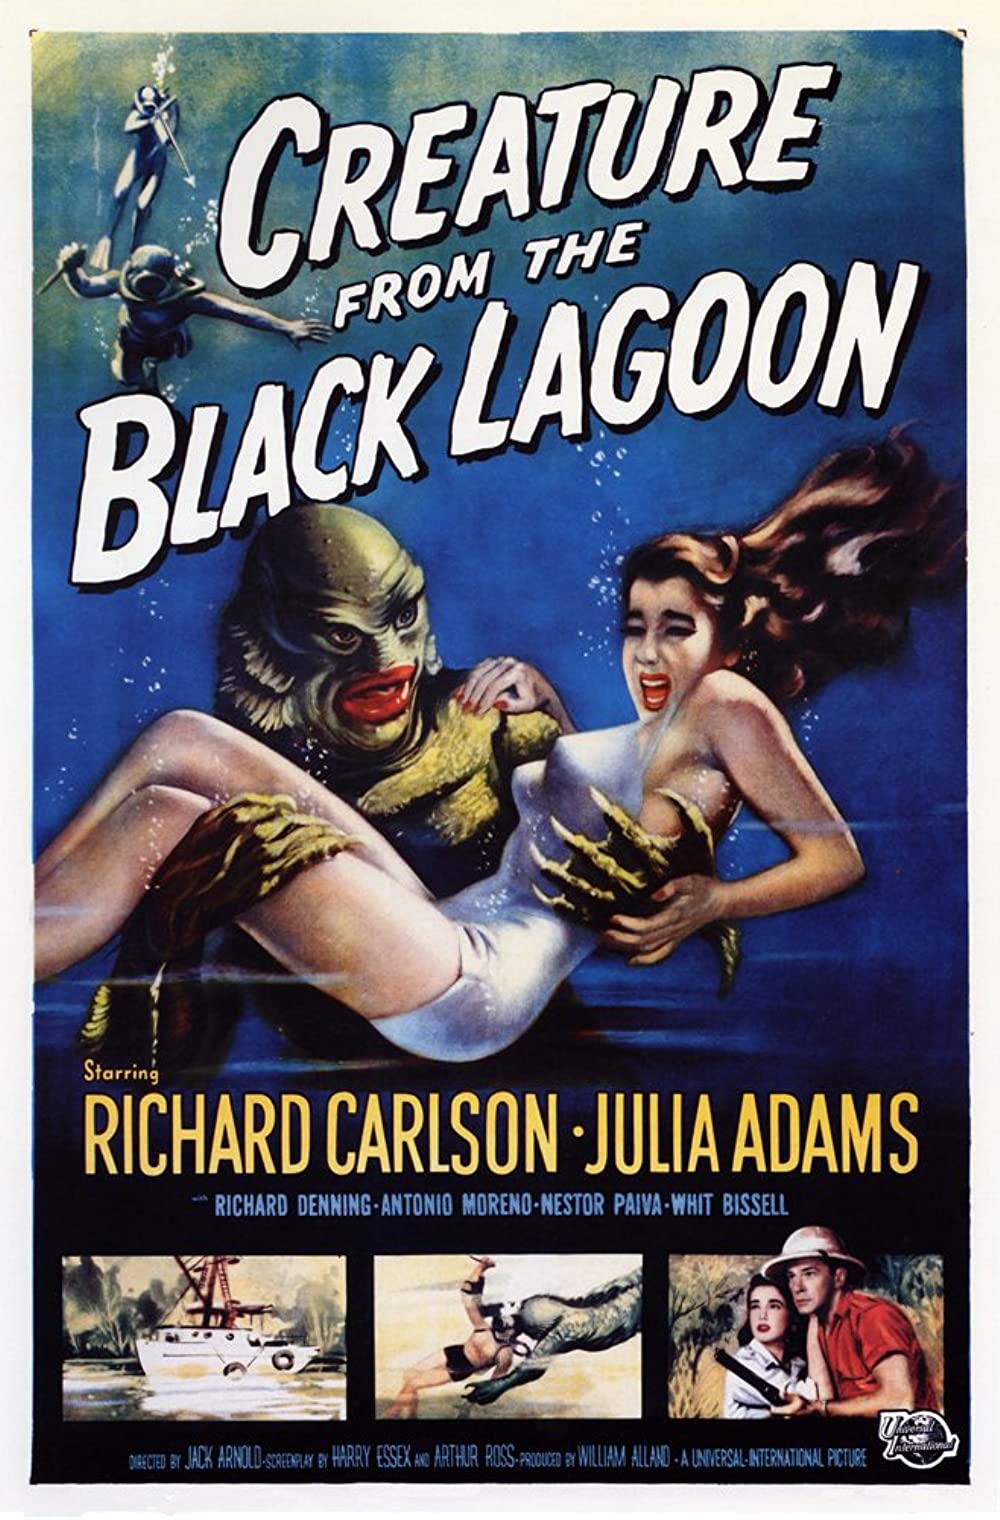 Filmbeschreibung zu Creature from the Black Lagoon